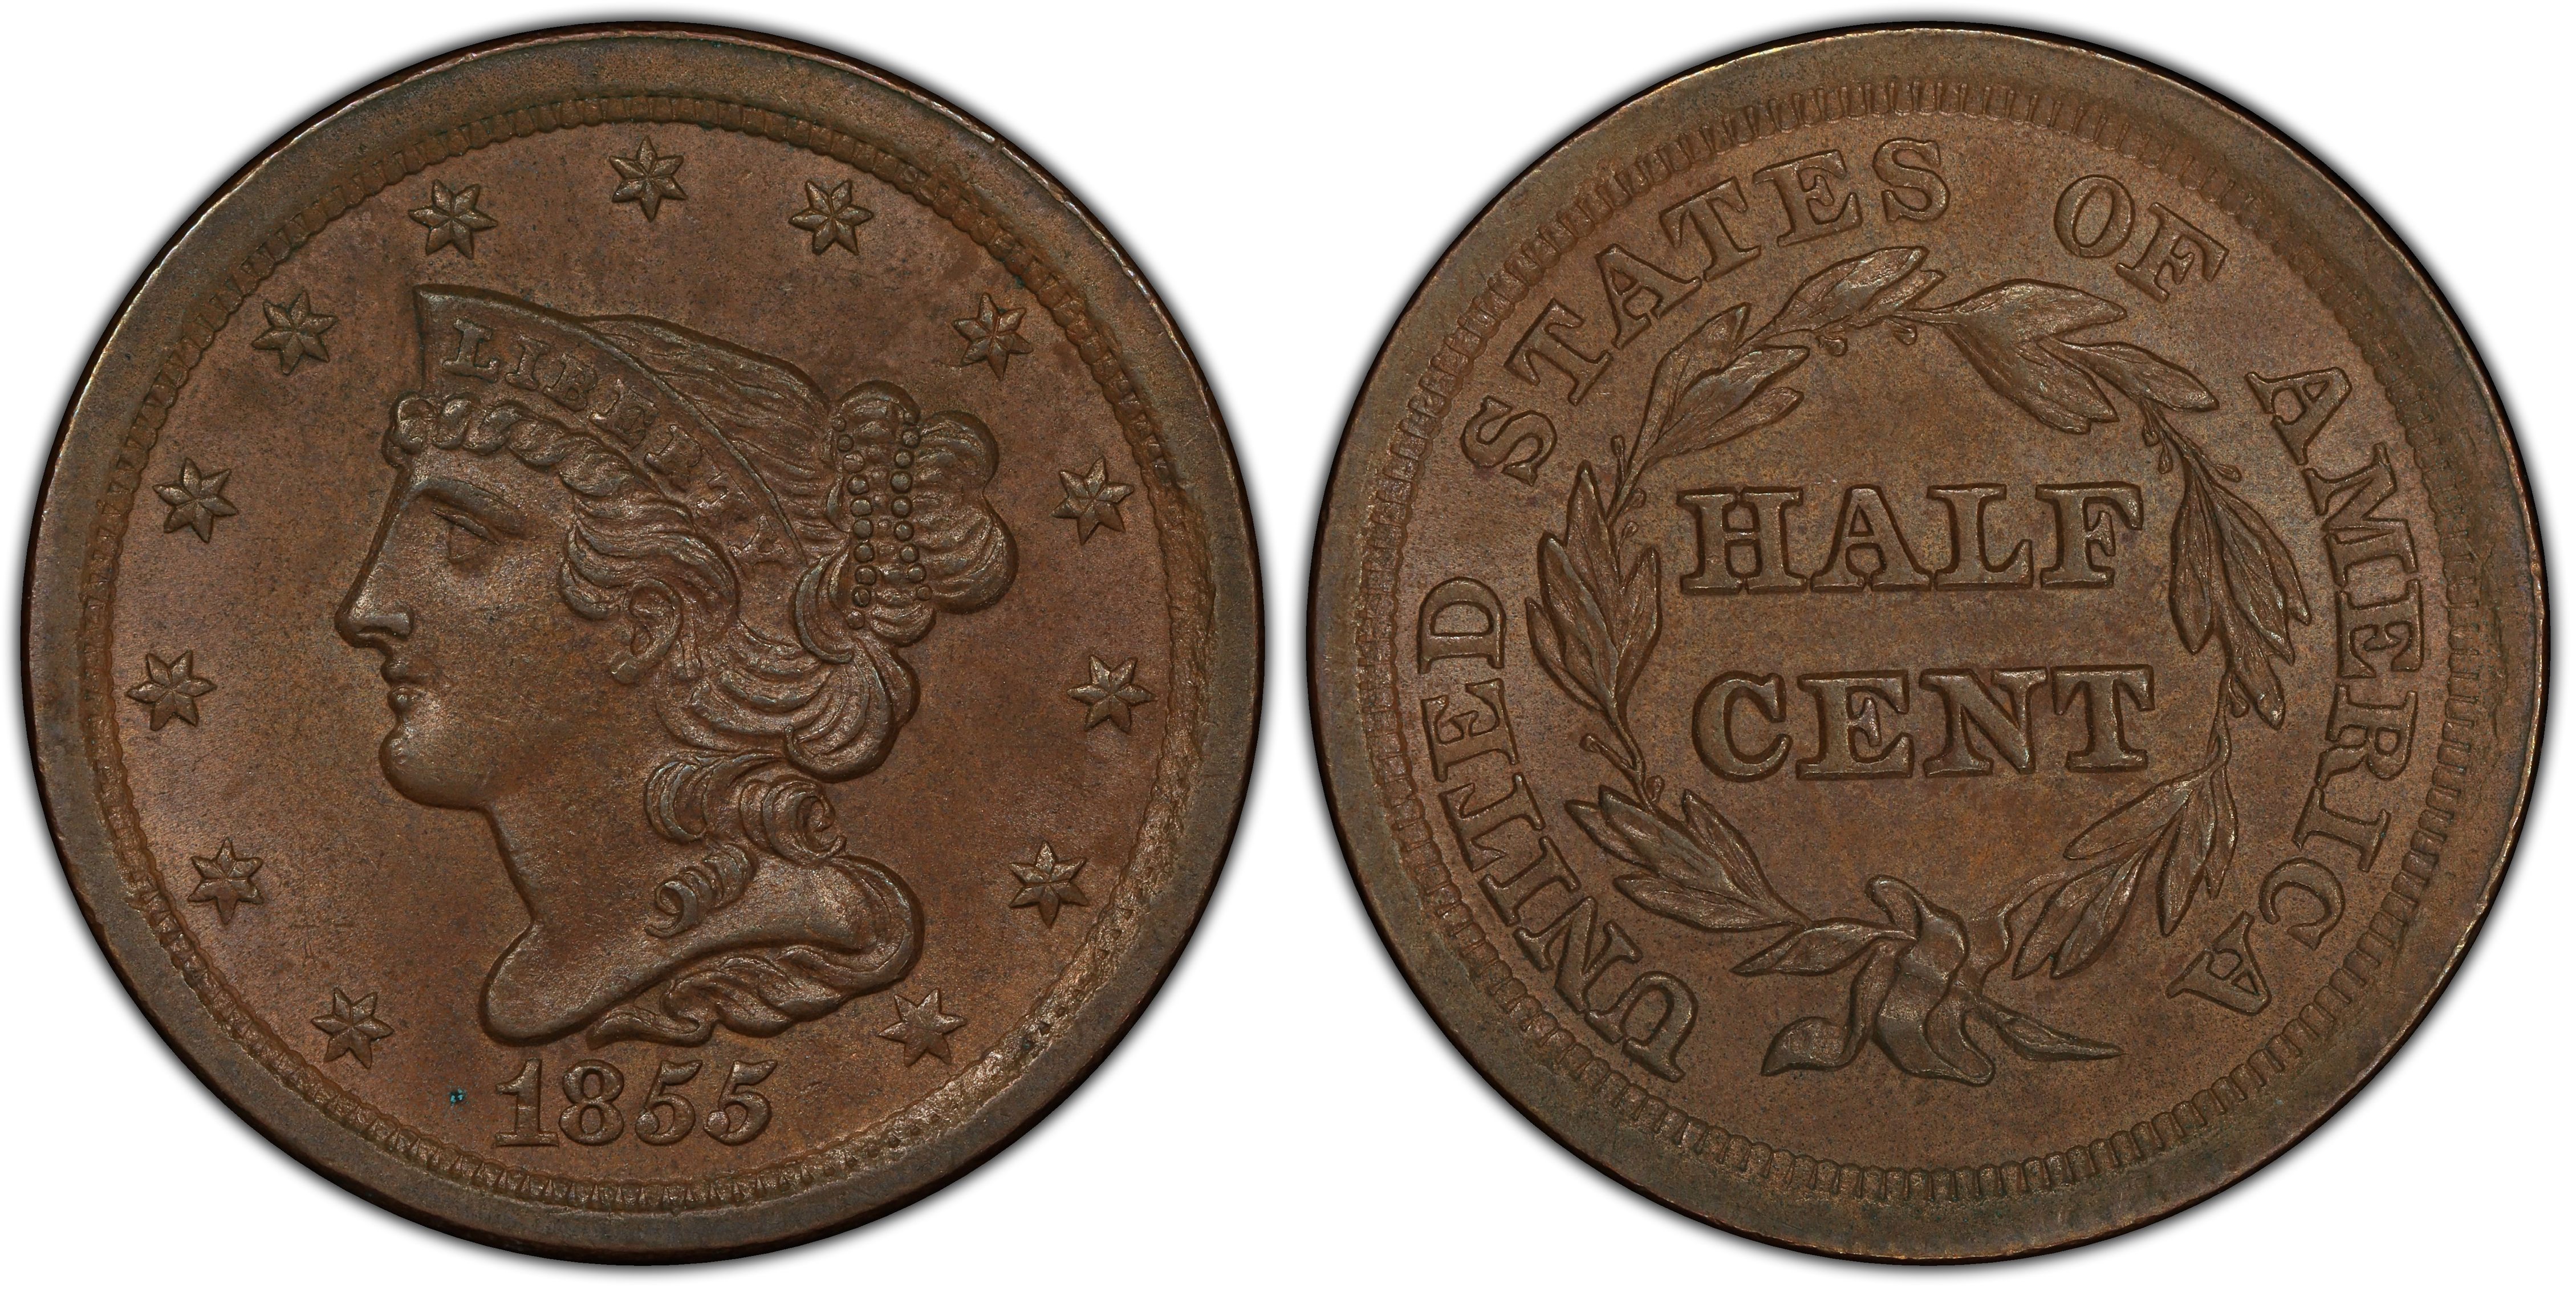 1855 1/2C, BN (Regular Strike) Braided Hair Half Cent - PCGS CoinFacts